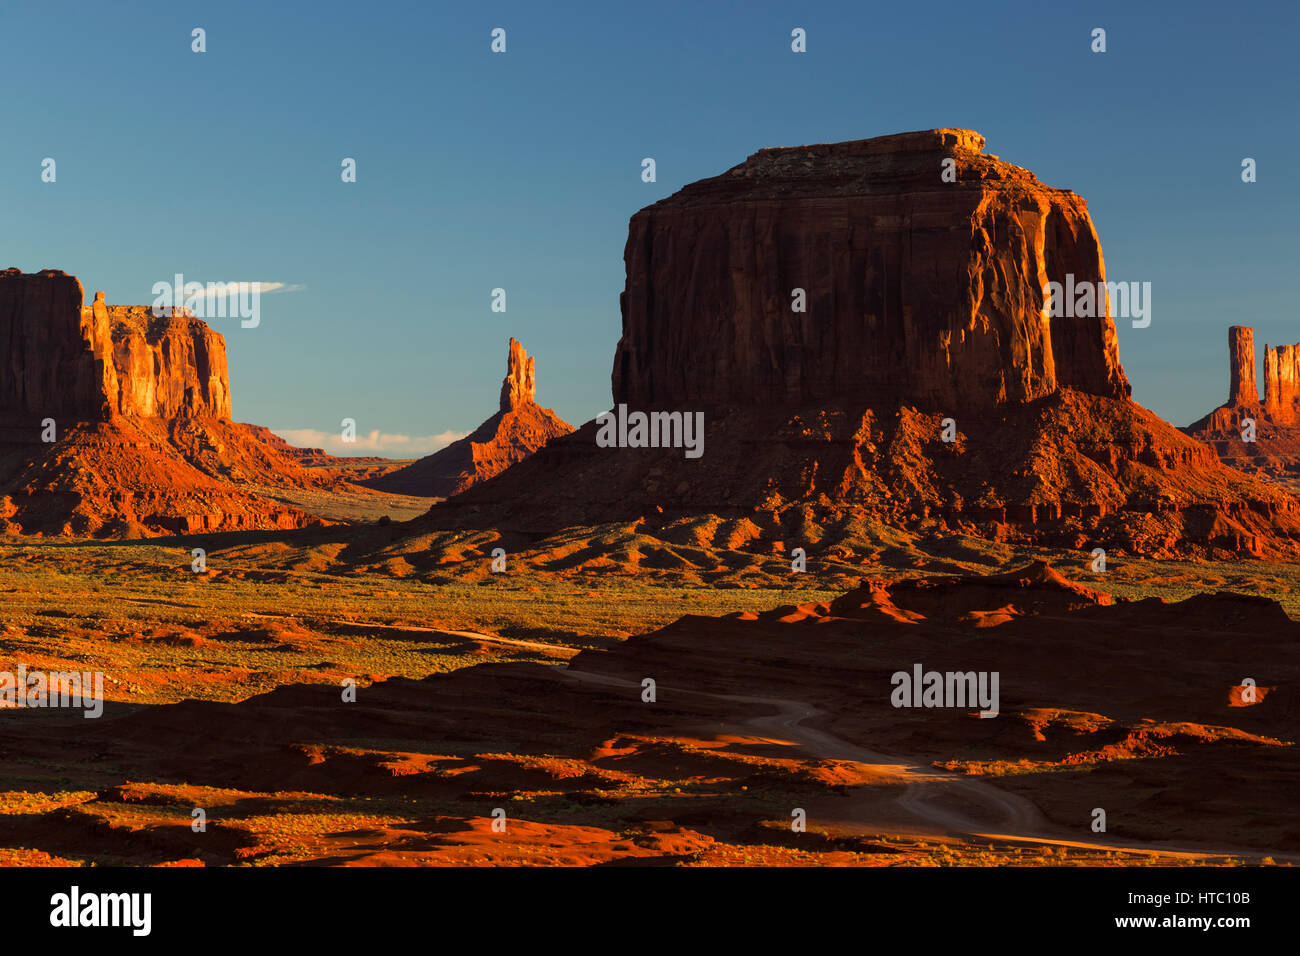 West-Handschuh, Merrick Butte, Schloss Butte, Big Indian von John Ford Point, Monument Valley Navajo Tribal Park, UT, USA Stockfoto